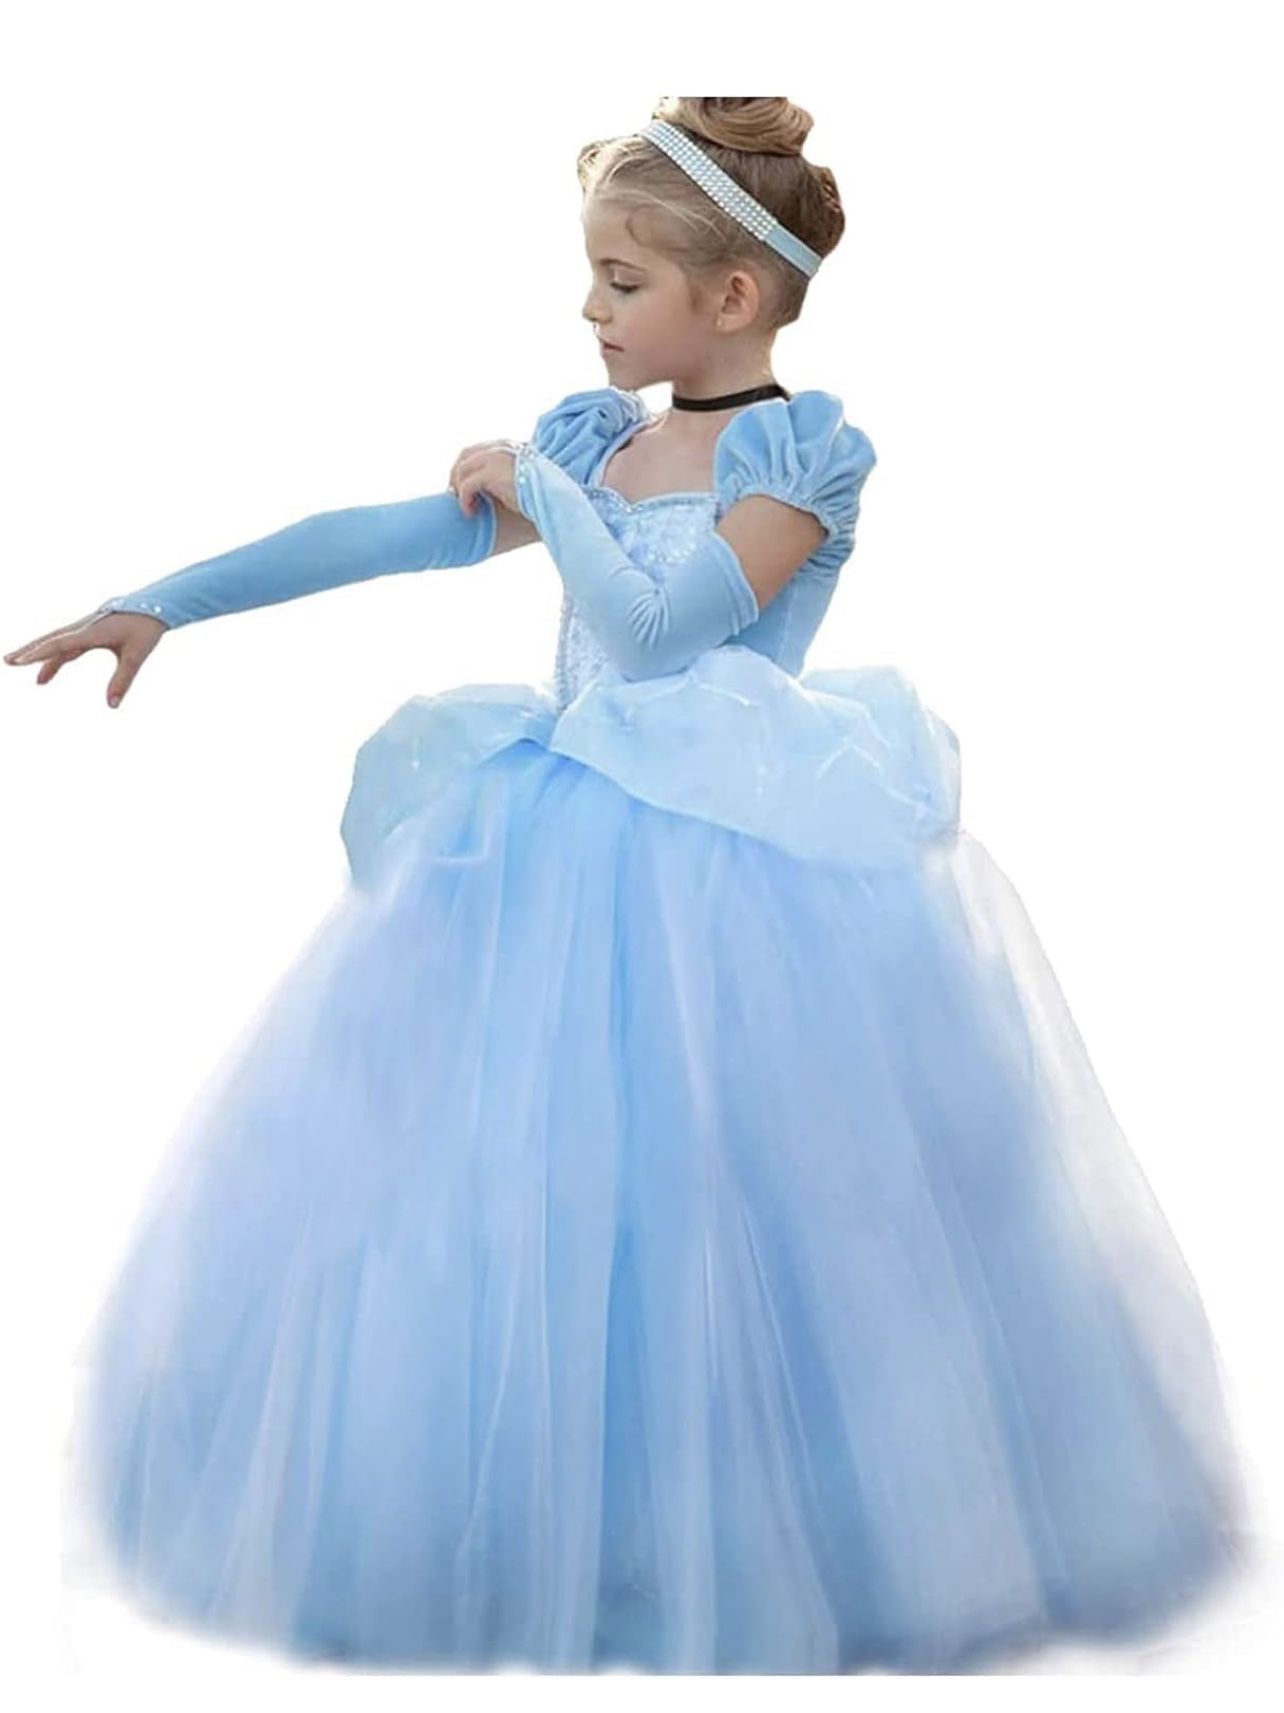 Cinderella Dress For Girl 4-5T